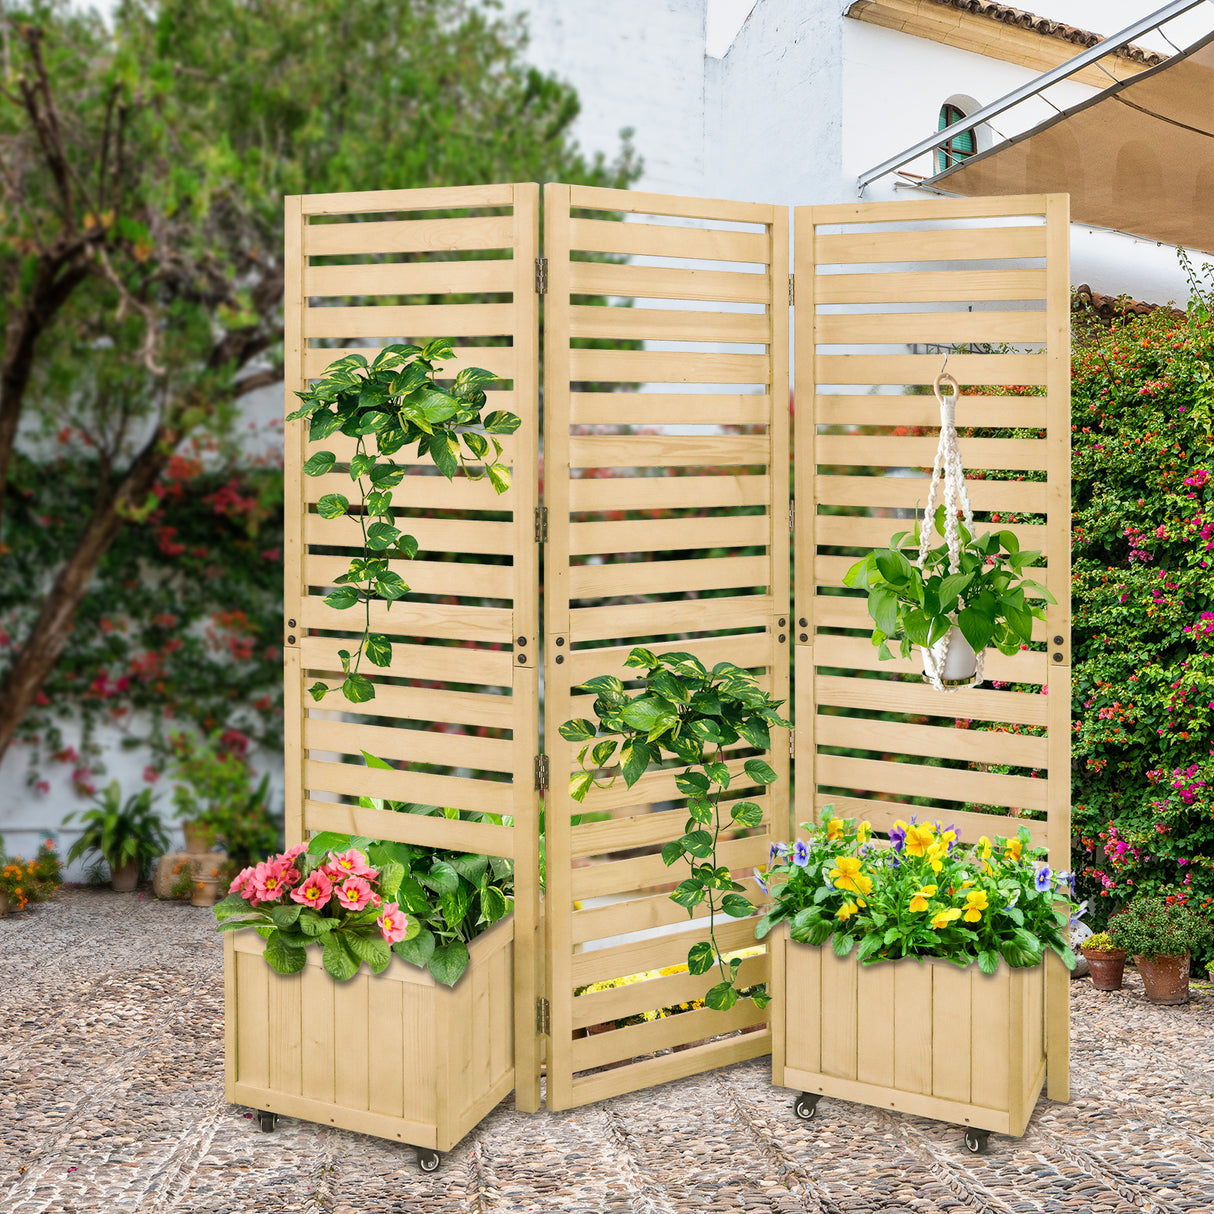 EAGLE PEAK Tri Fold Outdoor Cedar Privacy Screen with 2 Raised Garden Beds